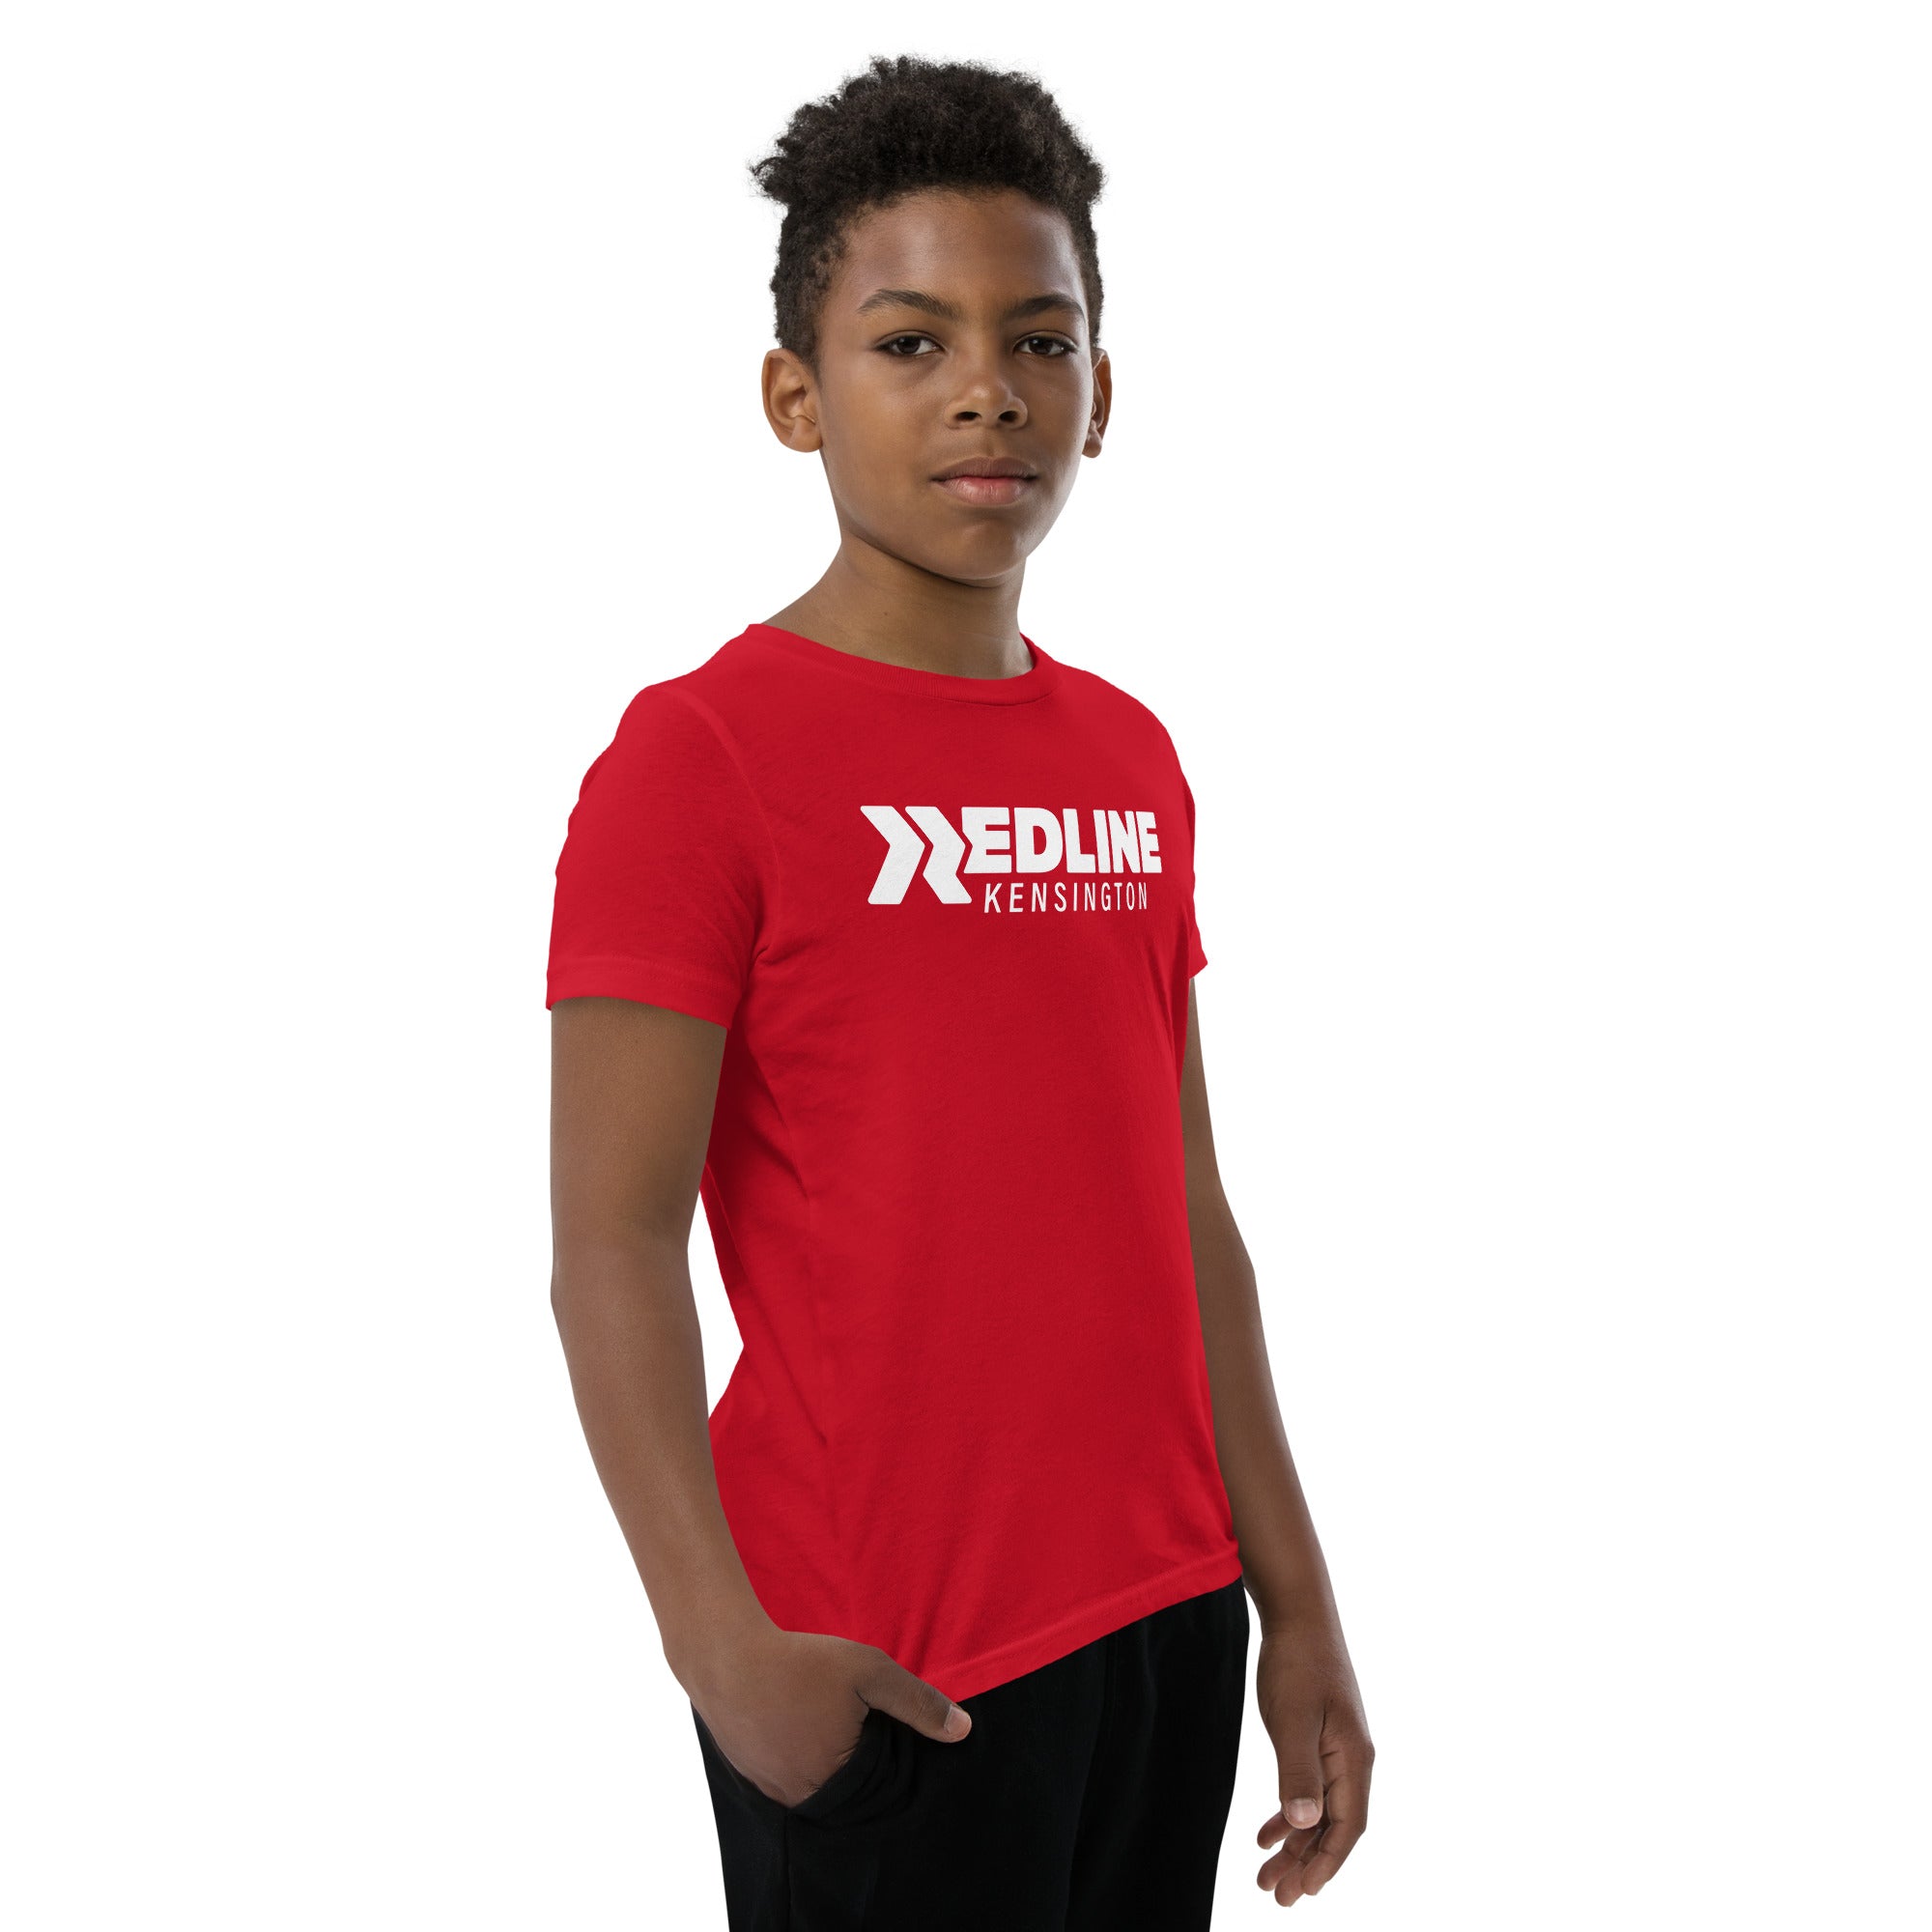 Kensington Logo W - Red Youth Short Sleeve T-Shirt